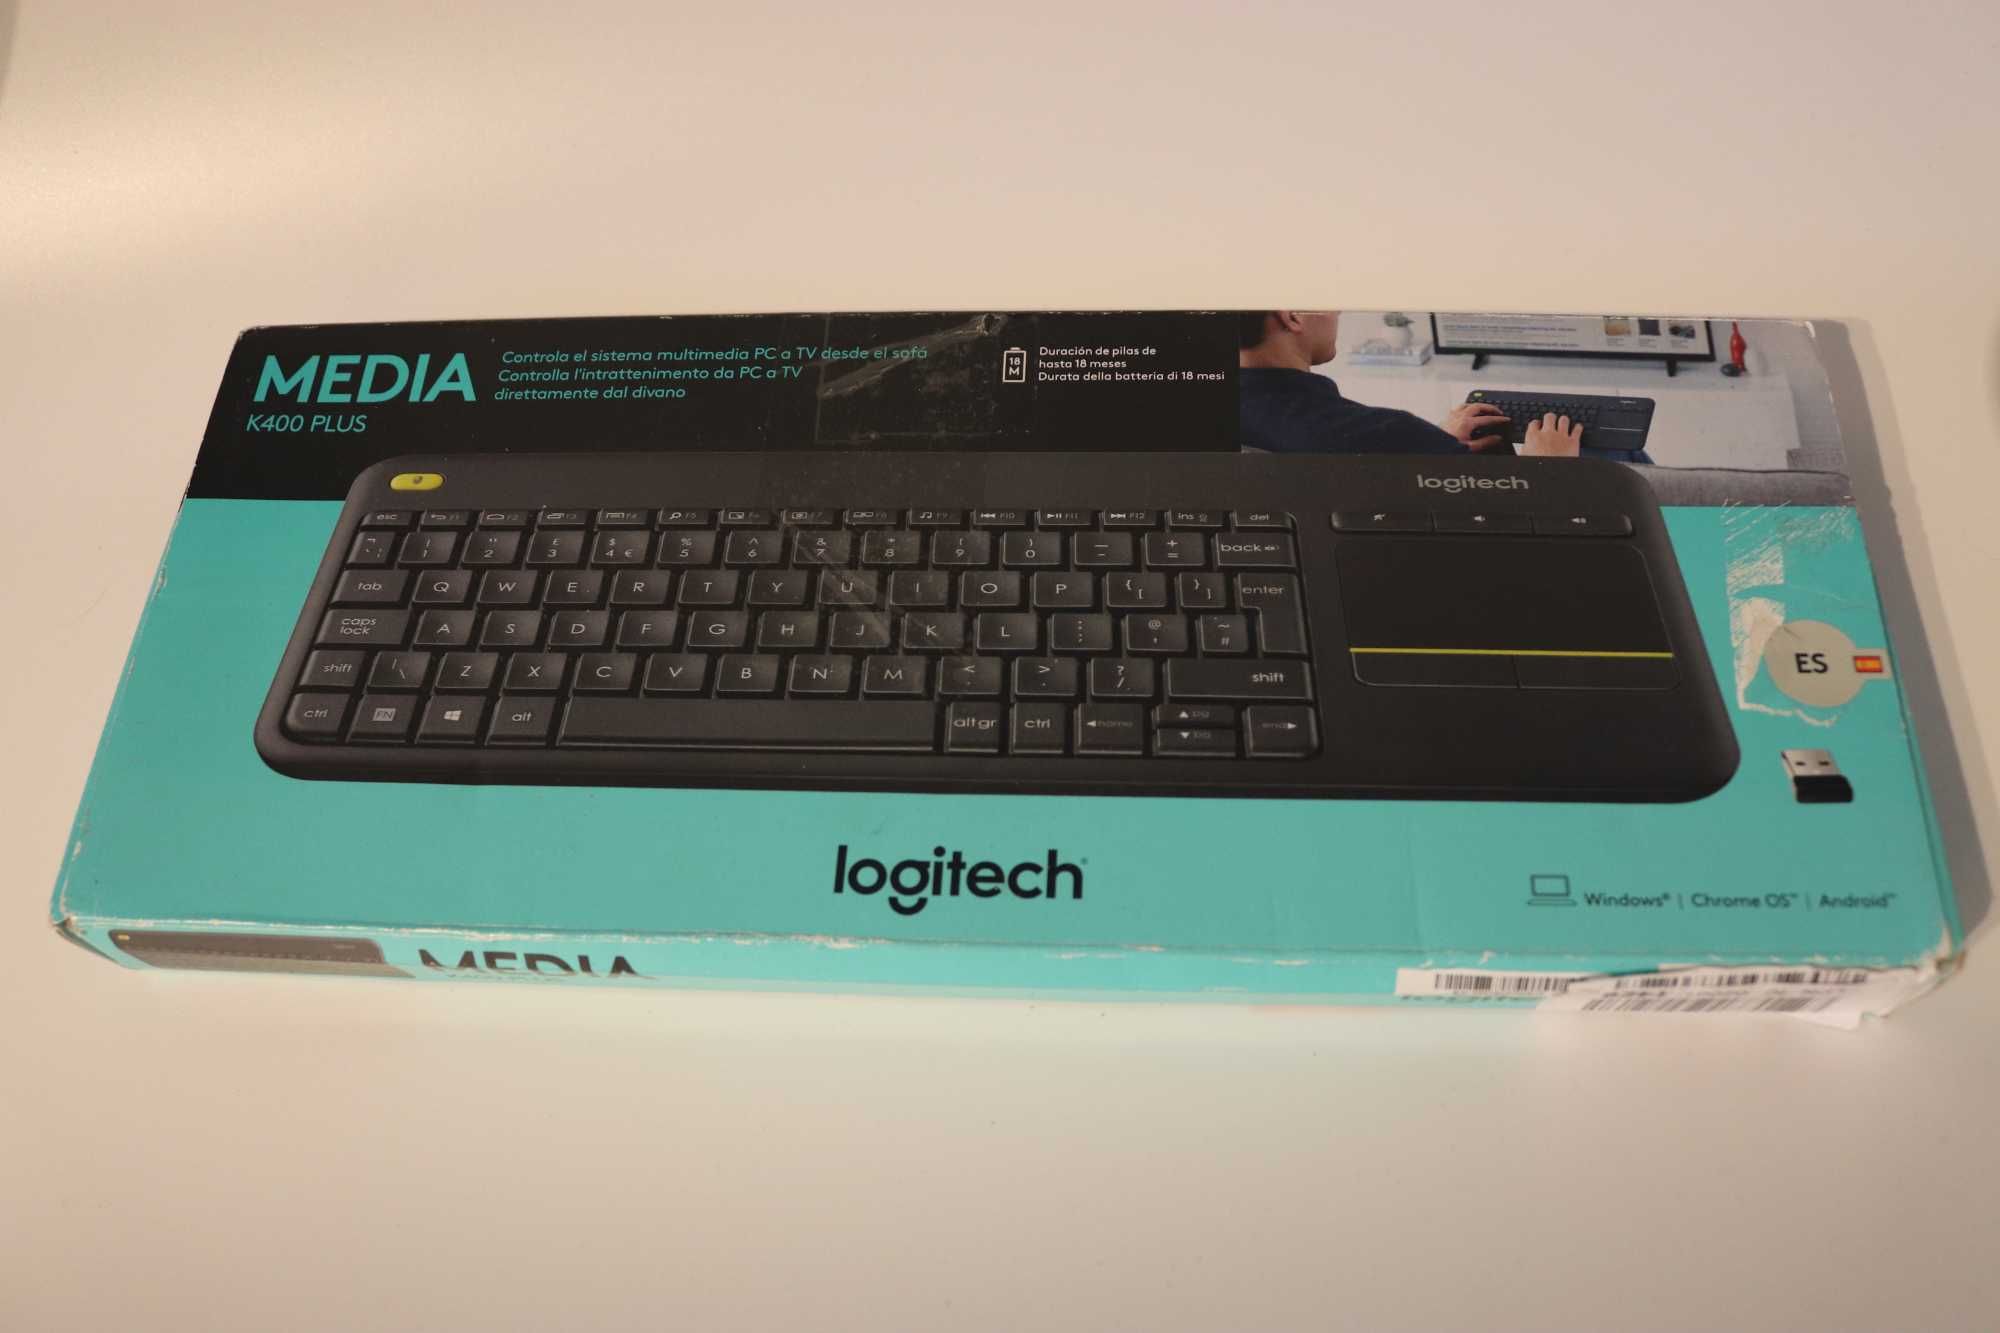 Logitech Media K400 Plus